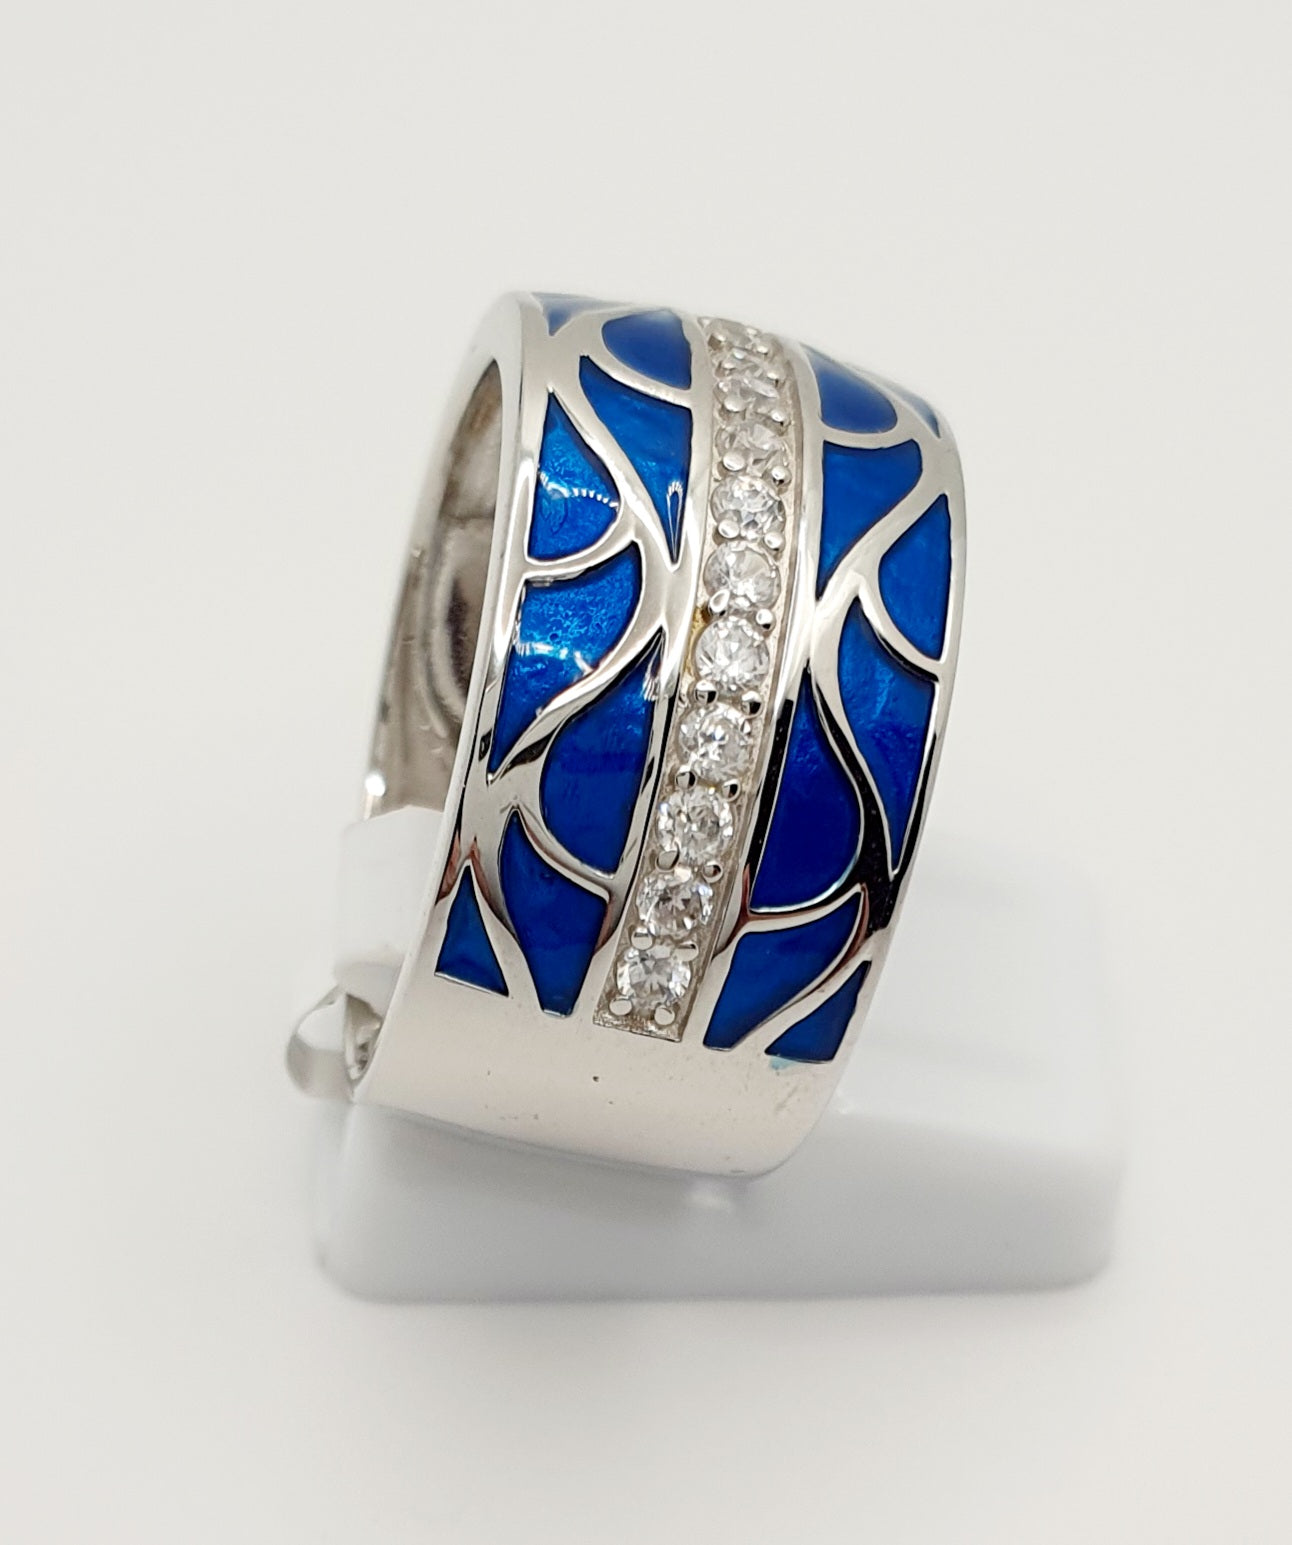 Sterling Silver Blue Enamel W/ Wave Design & White Cubic Zirconia Ring